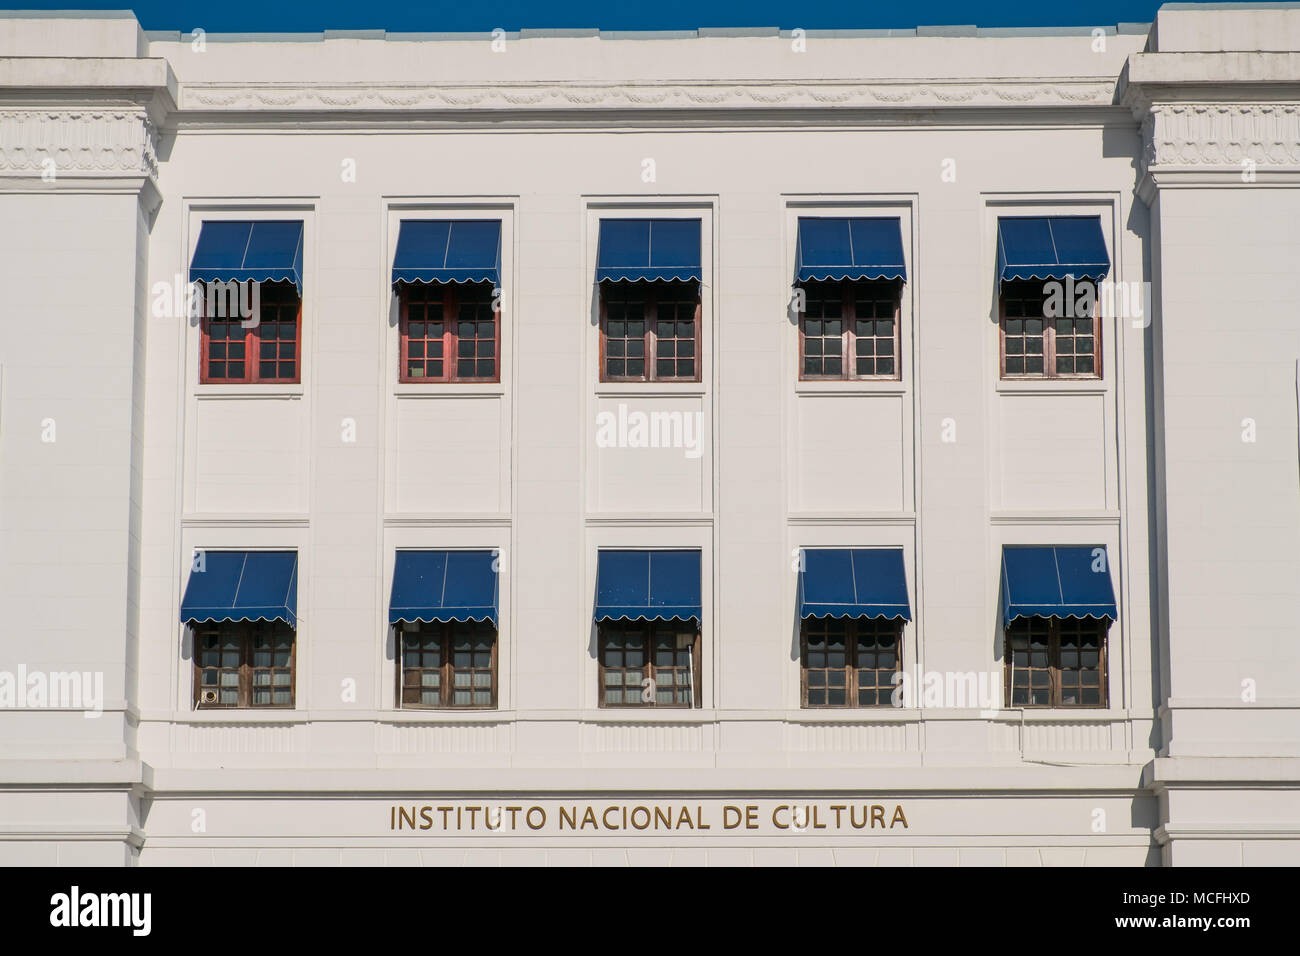 Die Fassade der nationalen Kultur Institut (Instituto Nacional de Cultura) von Panama in der Casco Viejo, Panama City Stockfoto